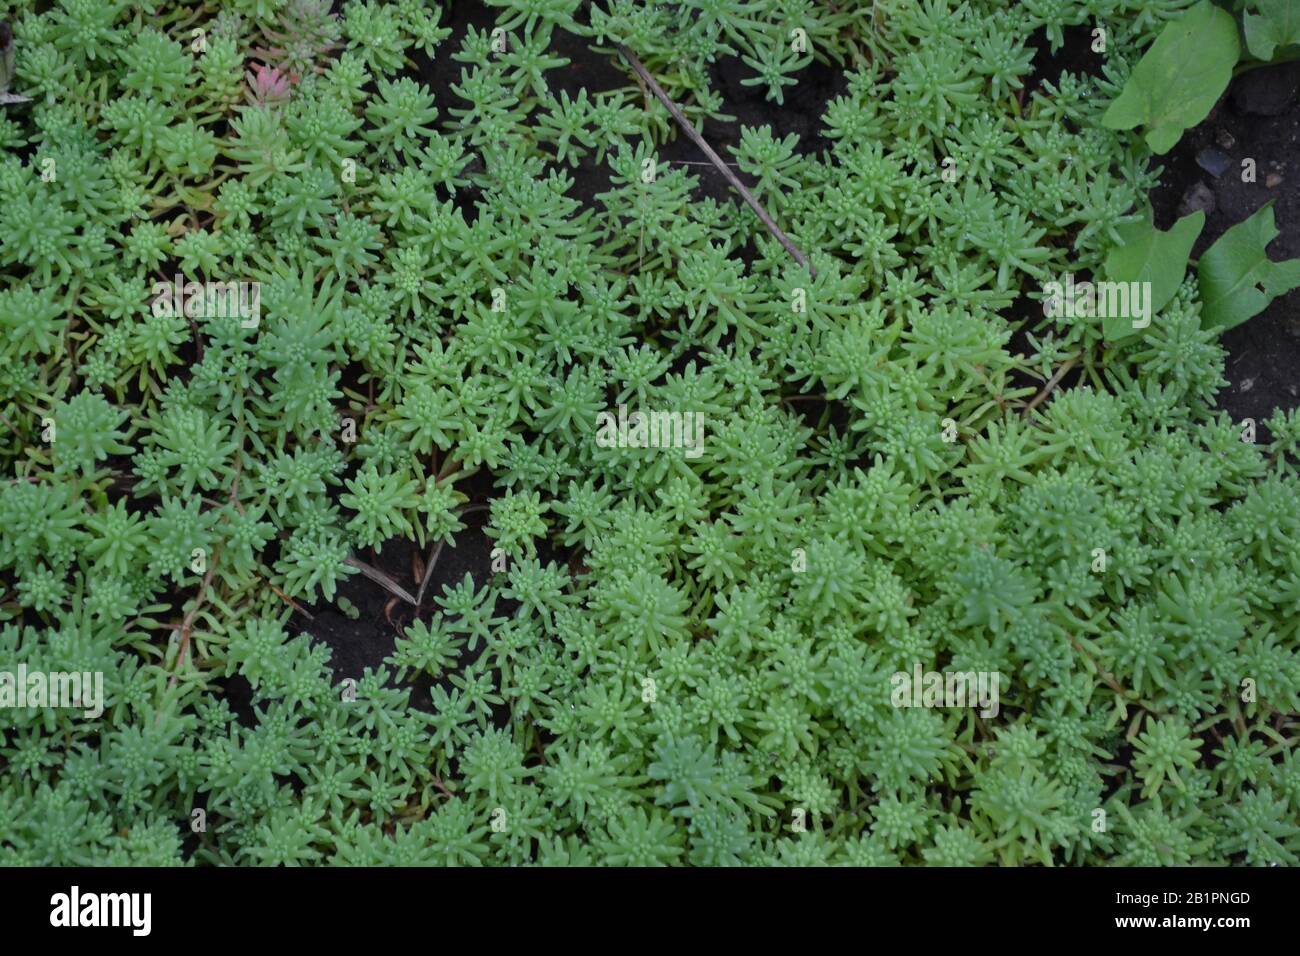 Sedum. Stonecrop. Hare cabbage. Green moss. Decorative grassy carpet. Green flower bed decoration. Garden. A beautiful plant. Horizontal photo Stock Photo